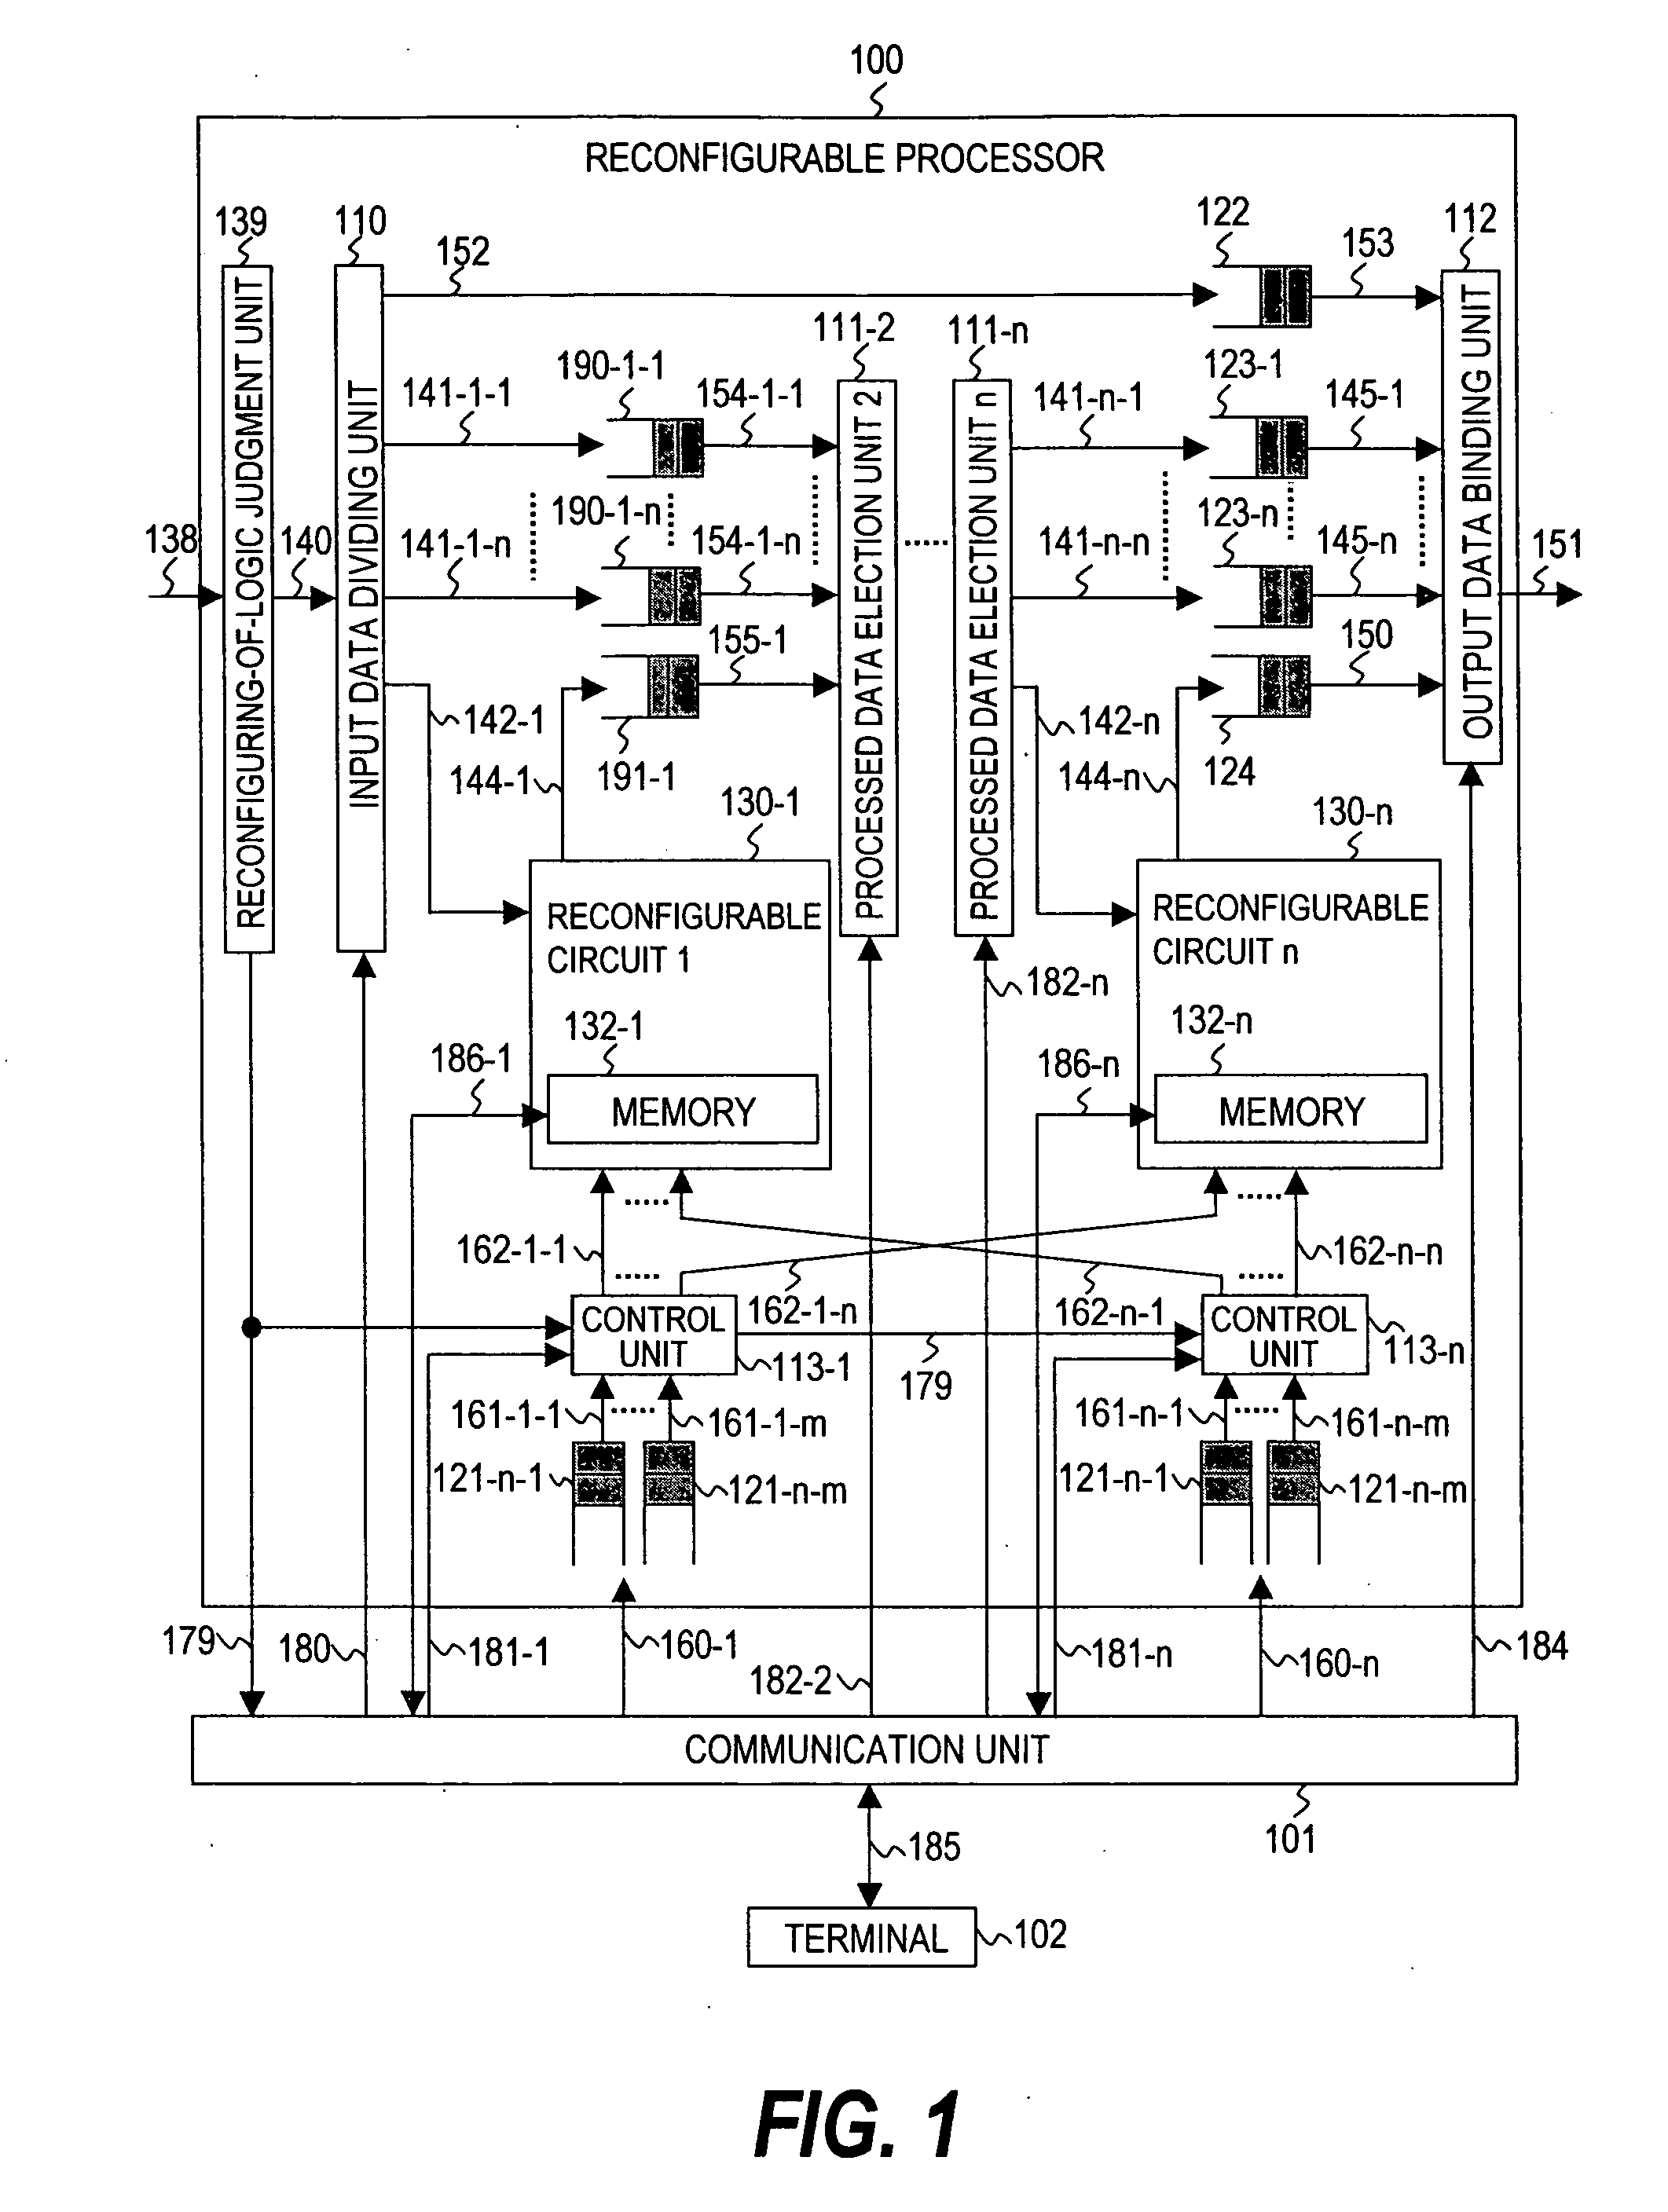 Reconfigurable processor and apparatus